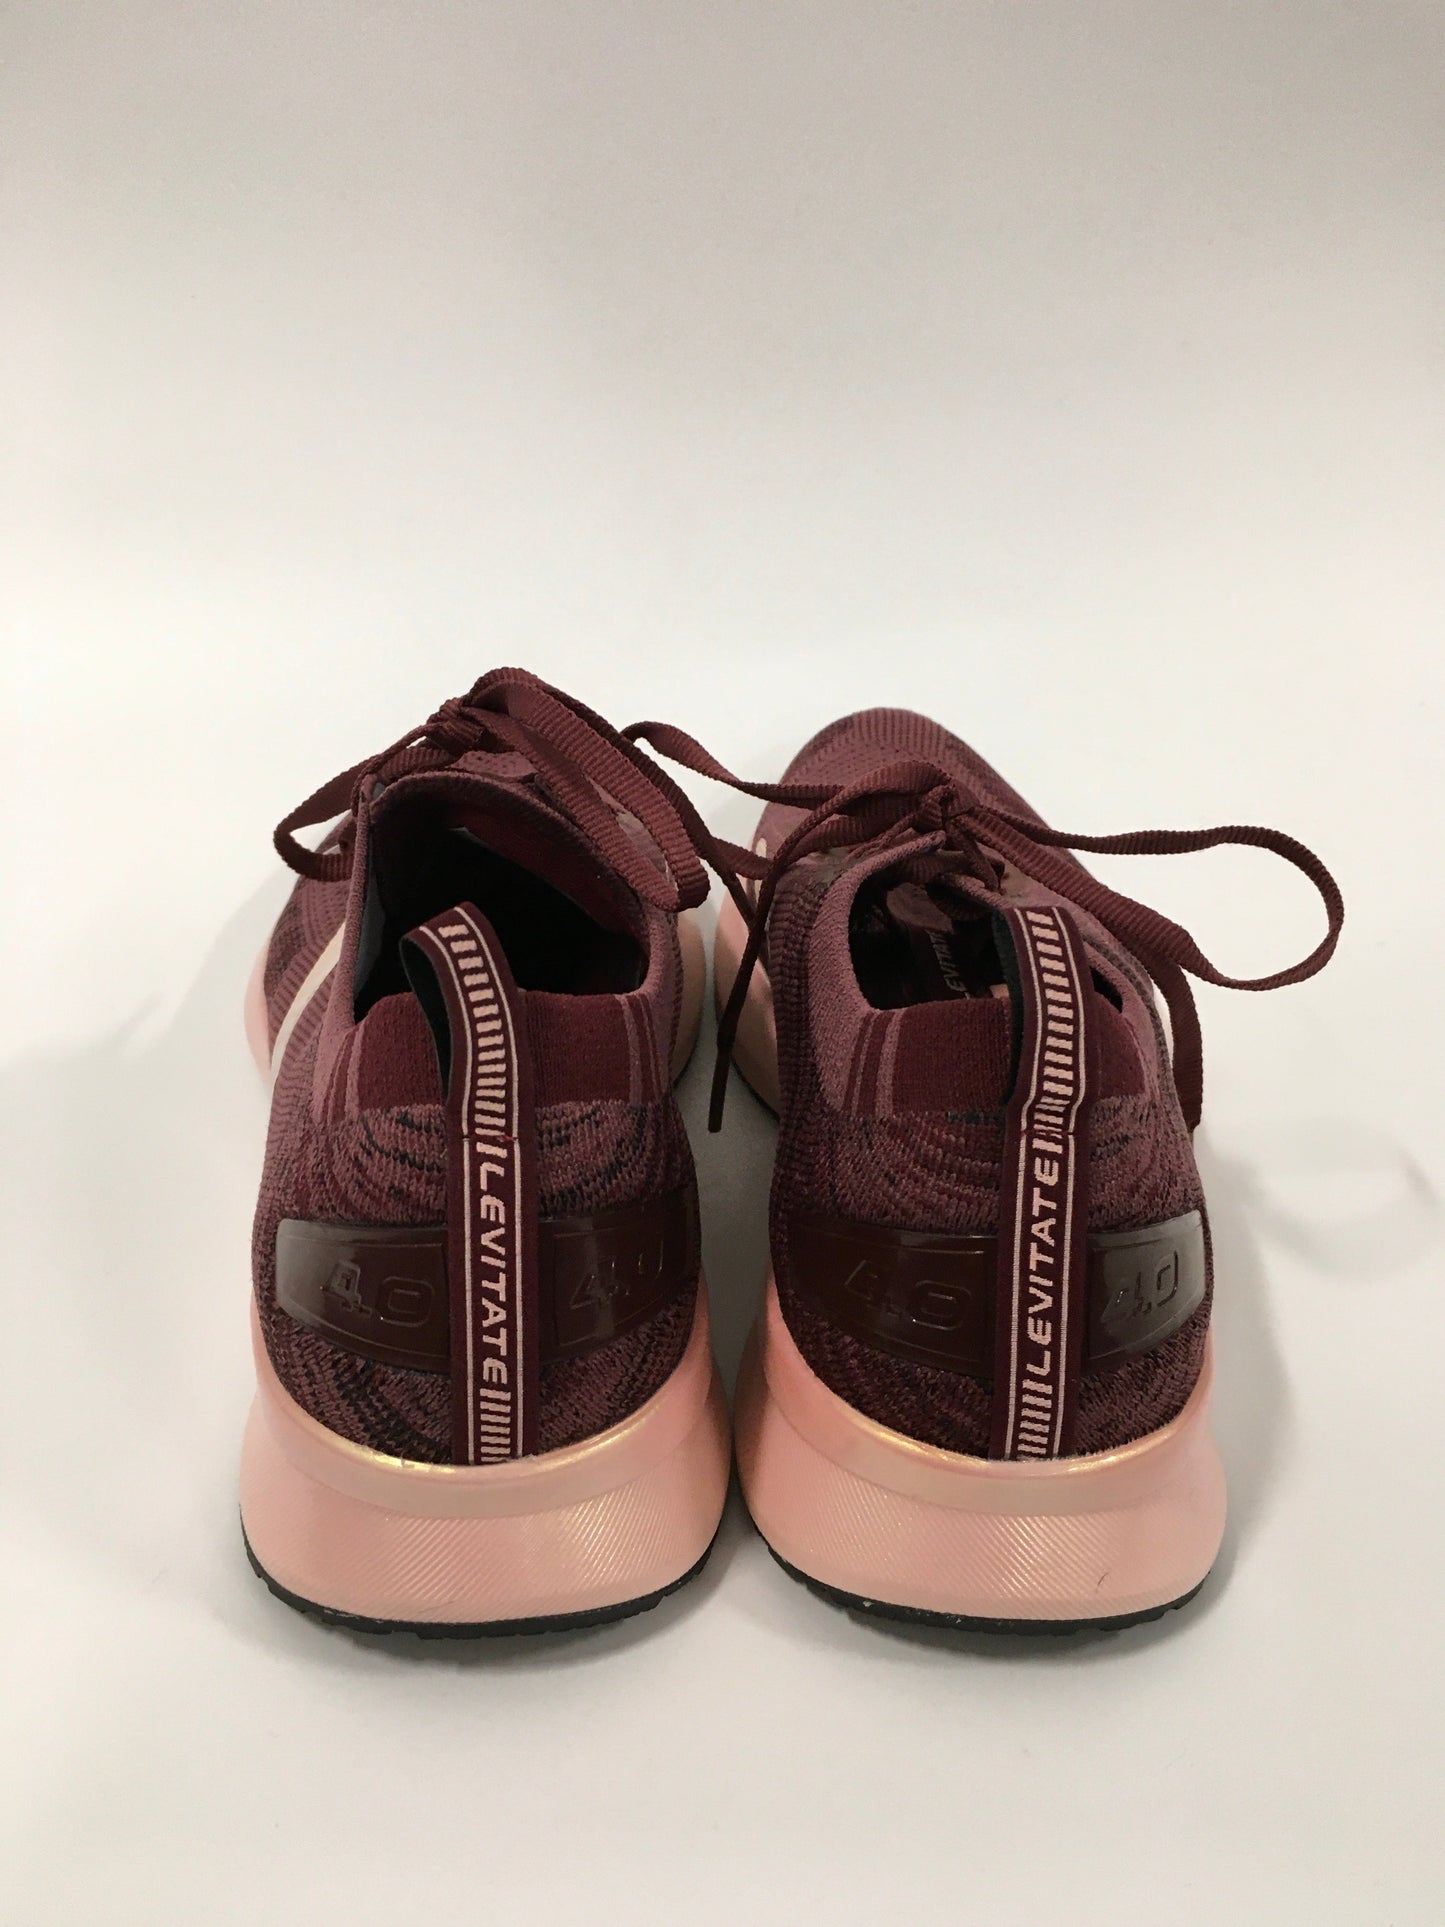 Maroon Shoes Athletic Brooks, Size 8.5